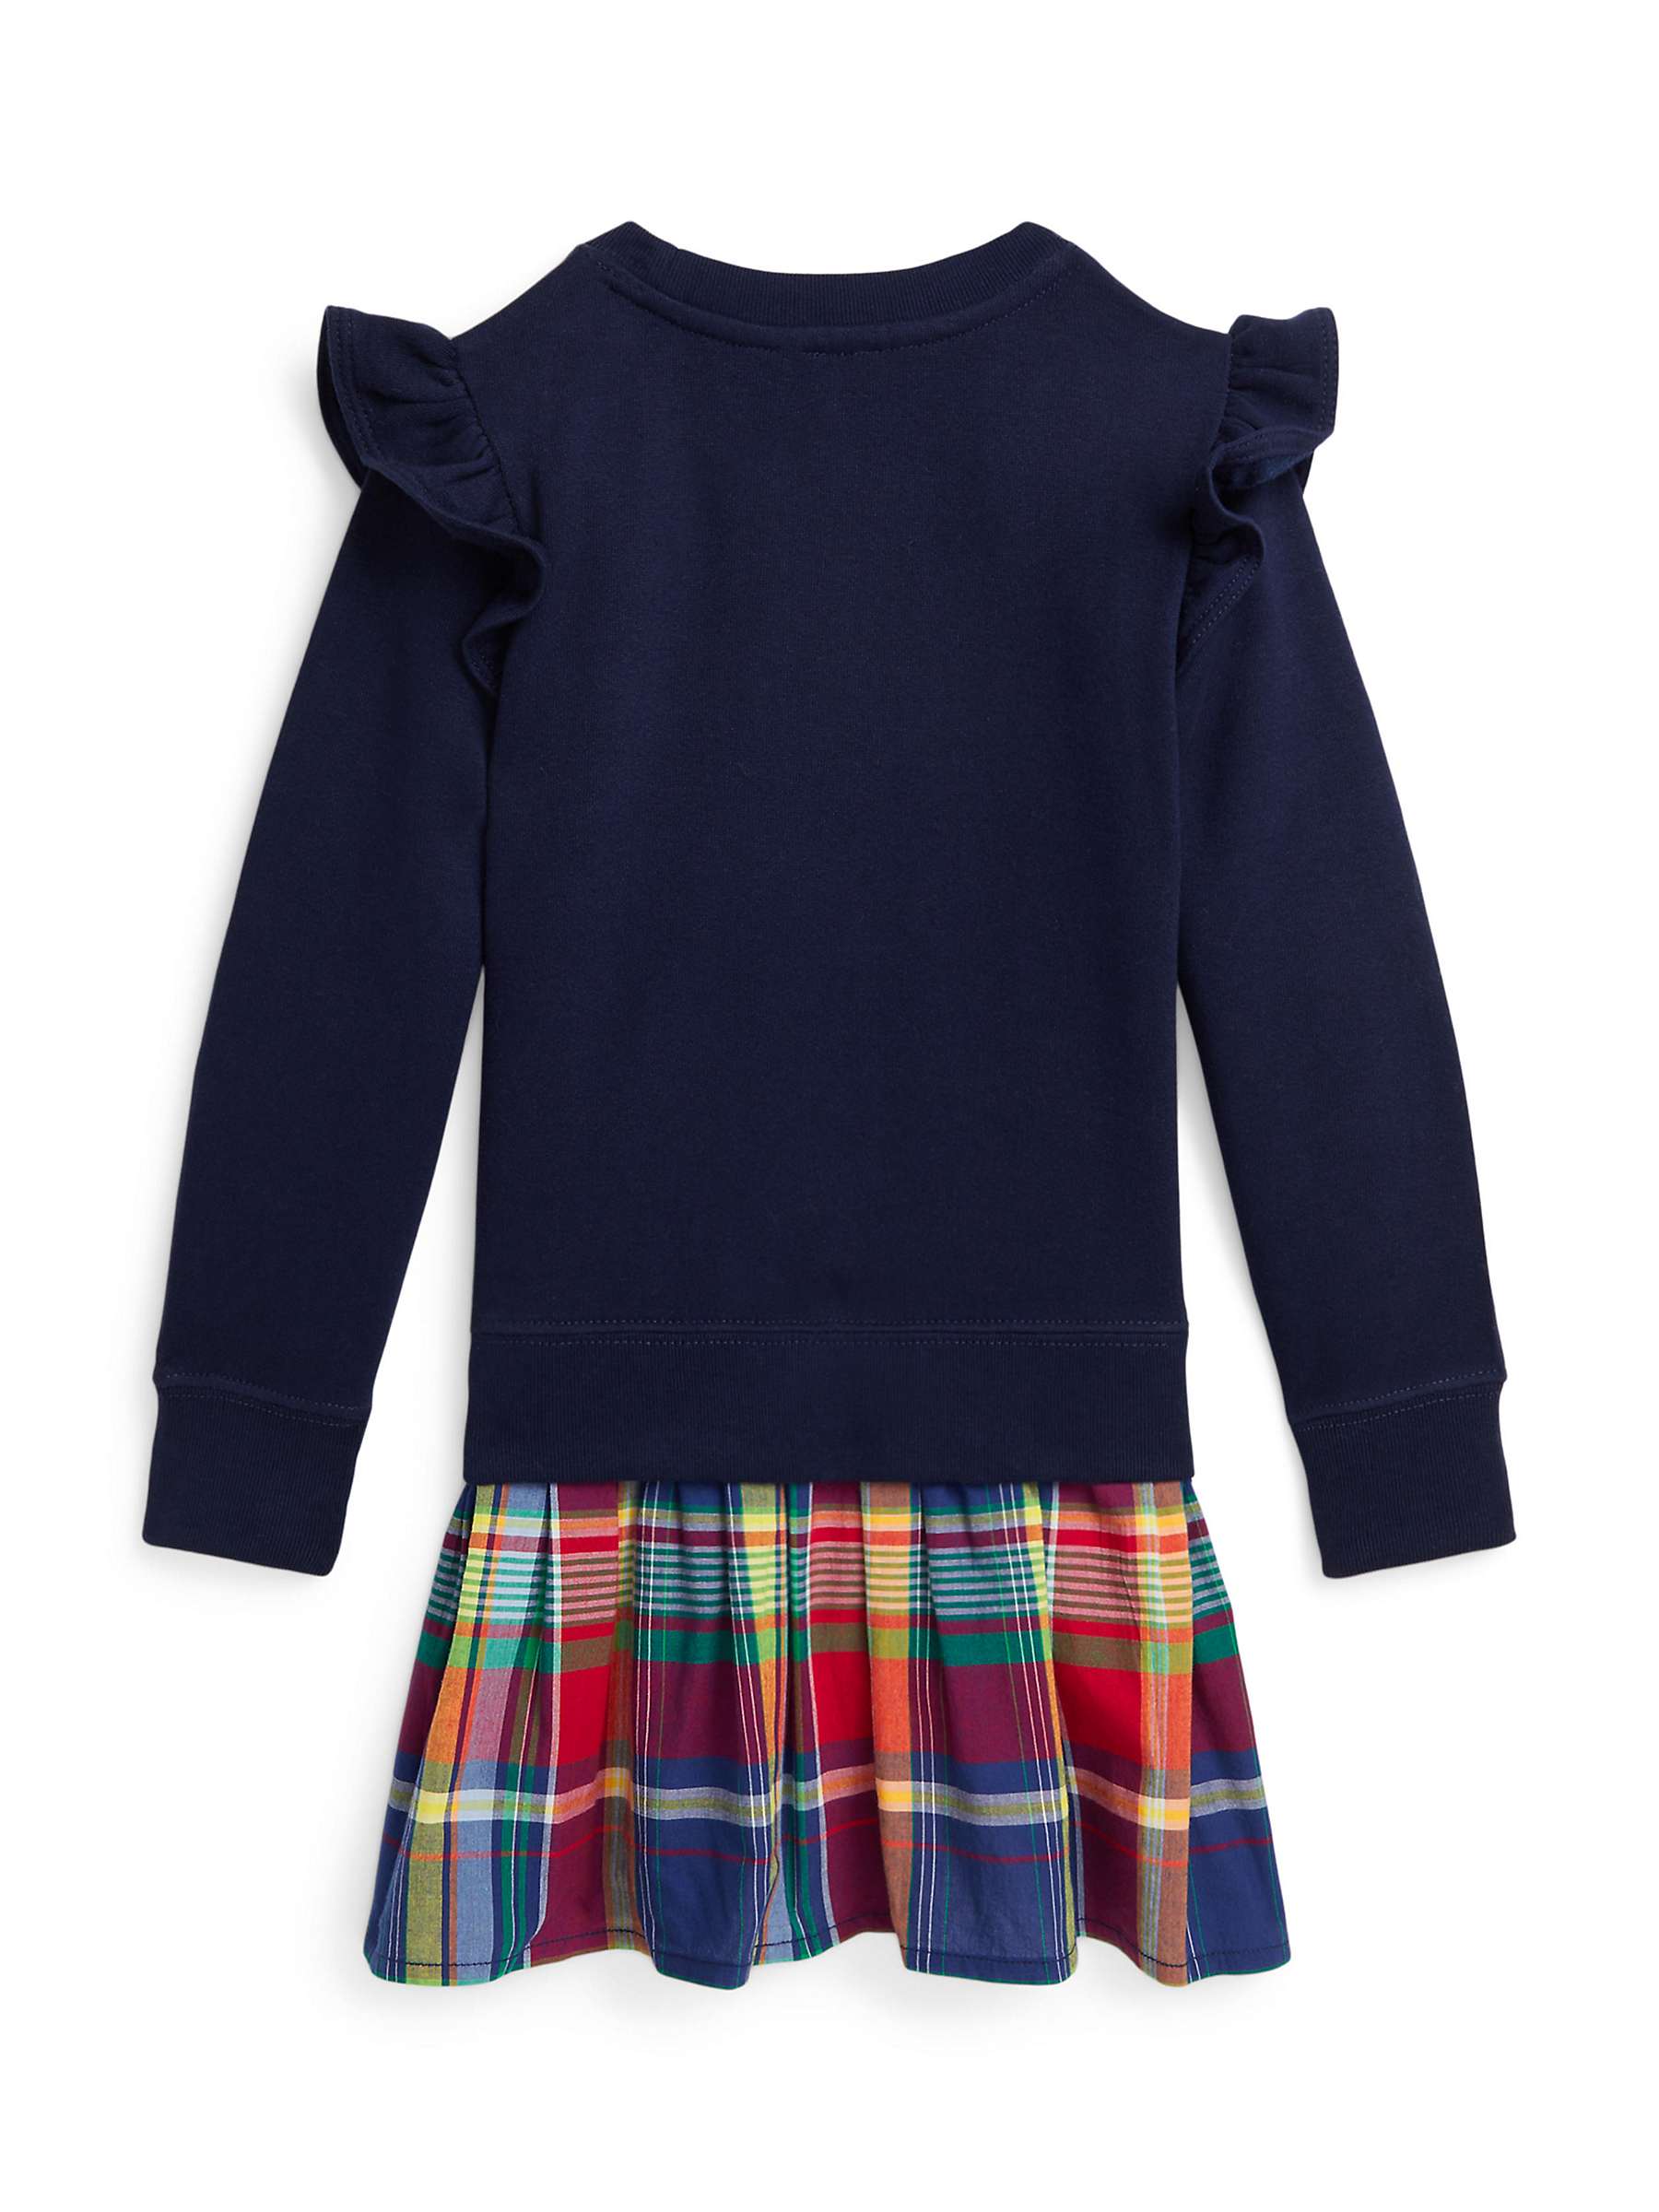 Buy Ralph Lauren Kids' Ruffle Dress, Newport Navy Online at johnlewis.com